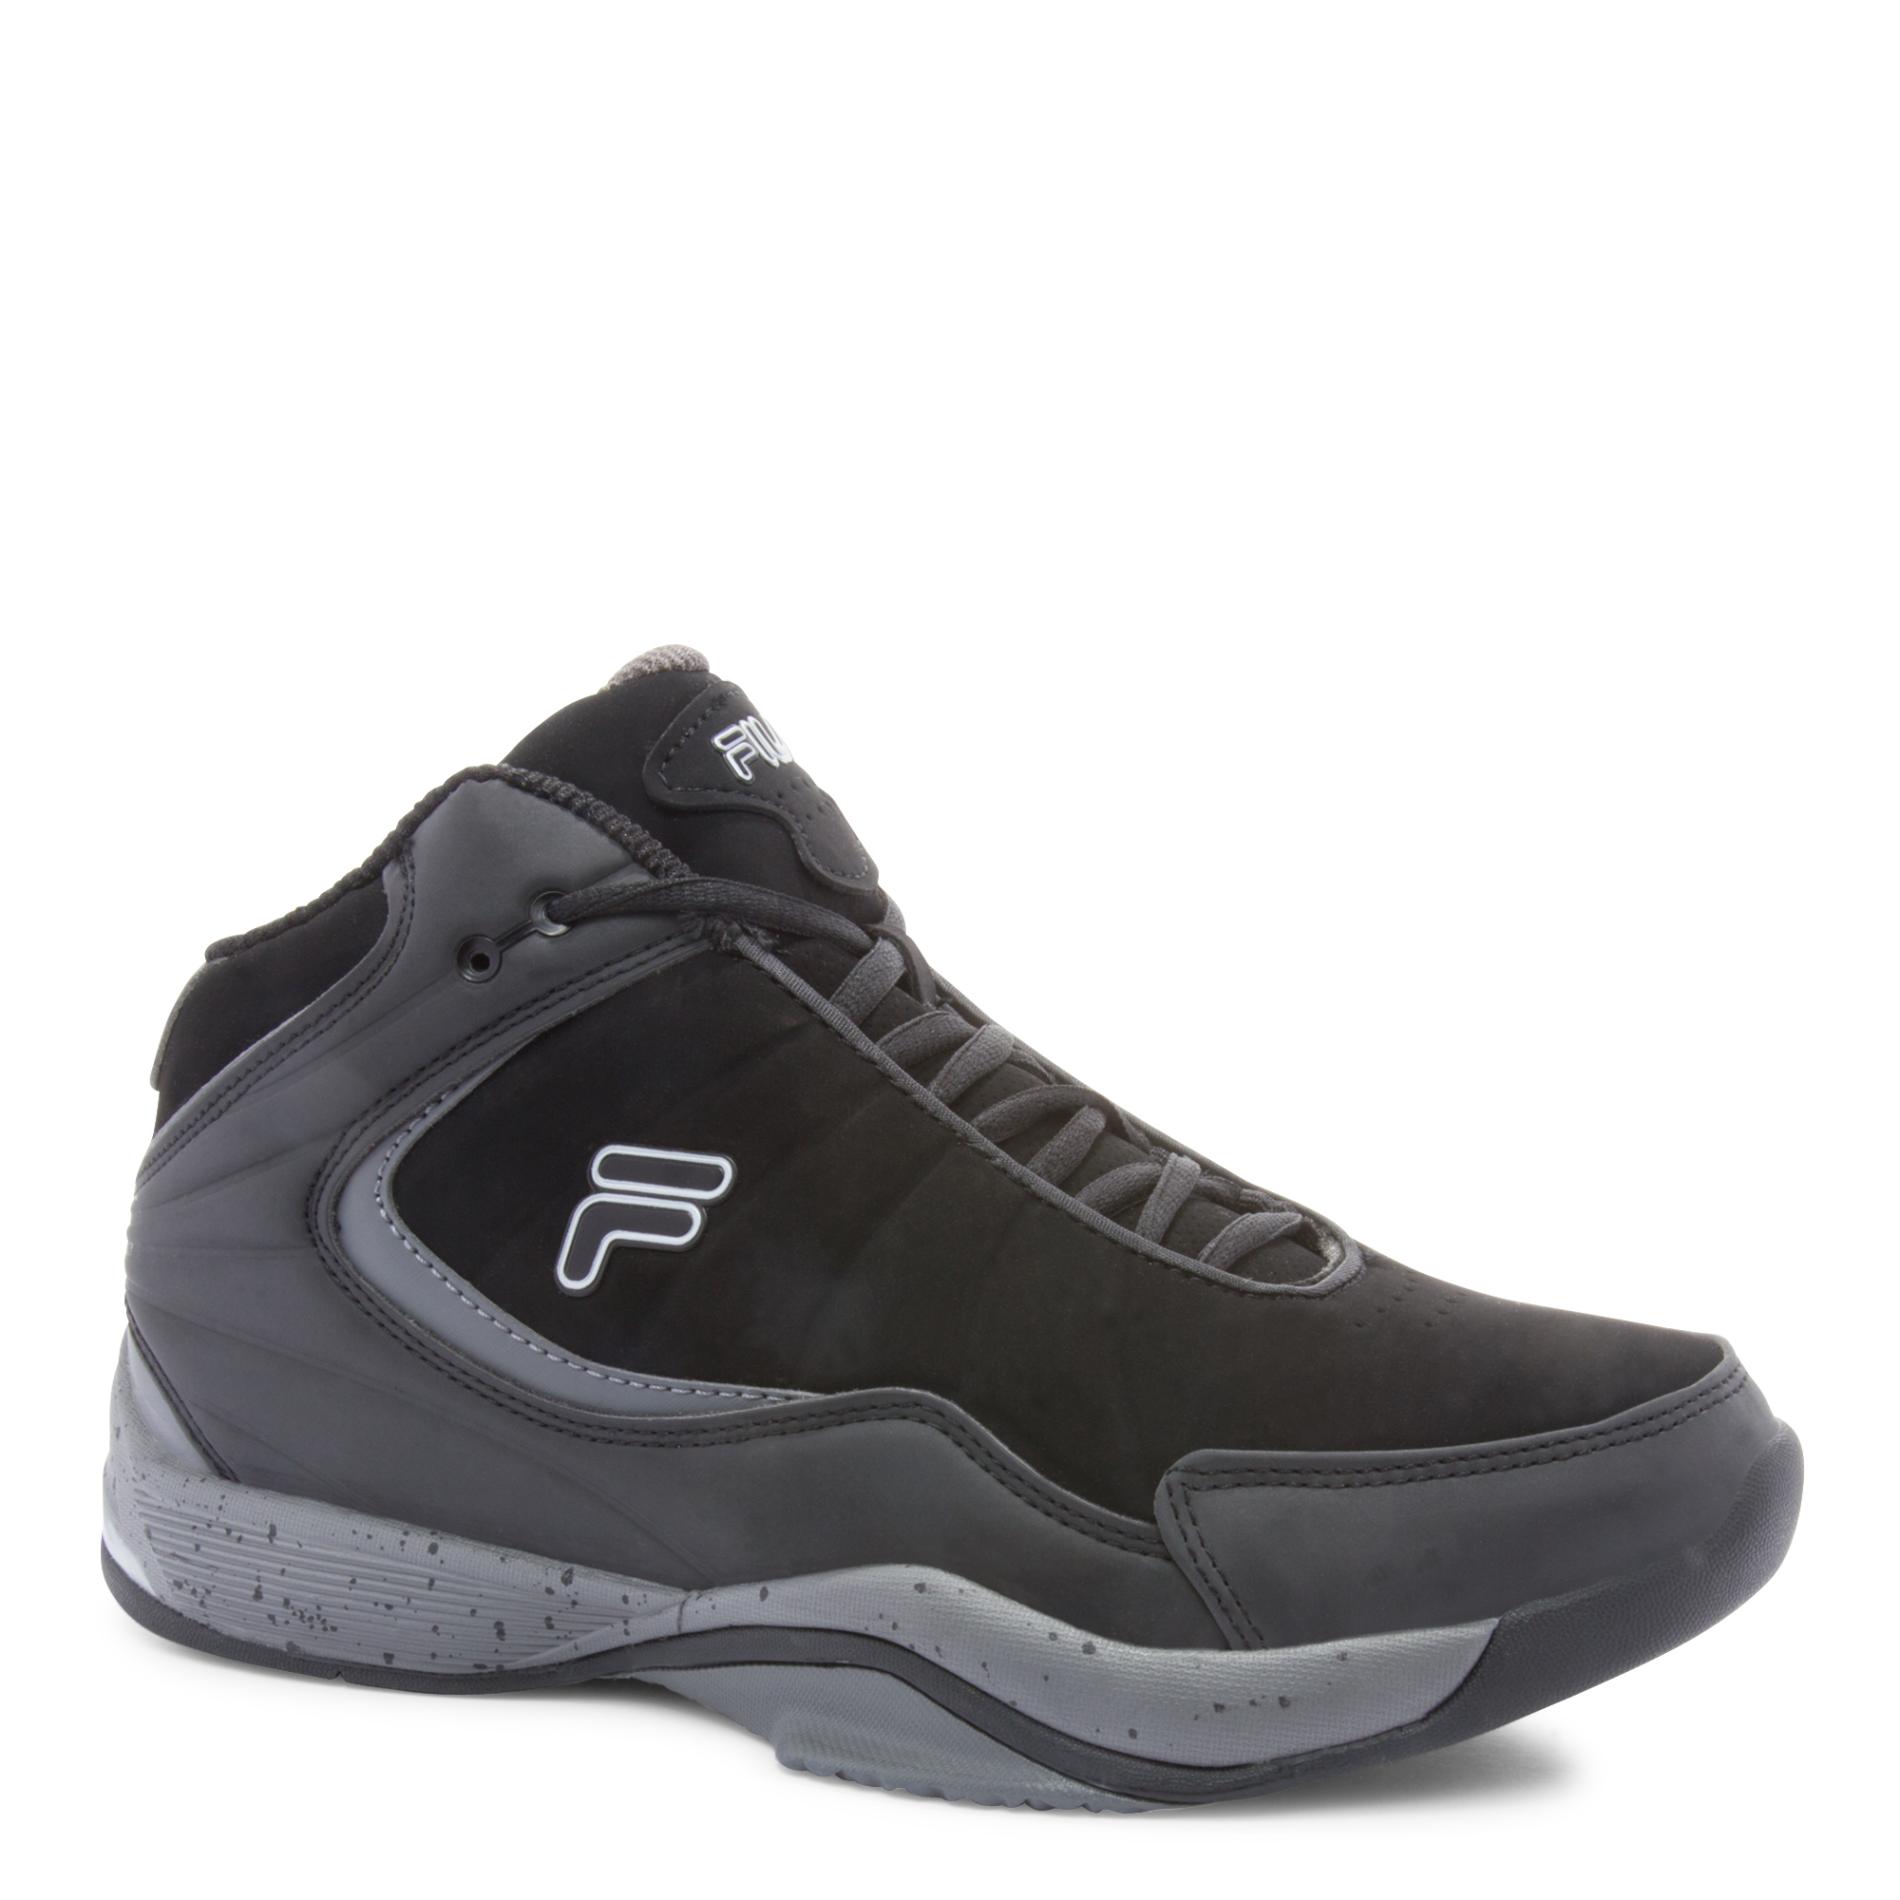 Fila Men's Breakaway 5 Black/Gray Basketball Shoe